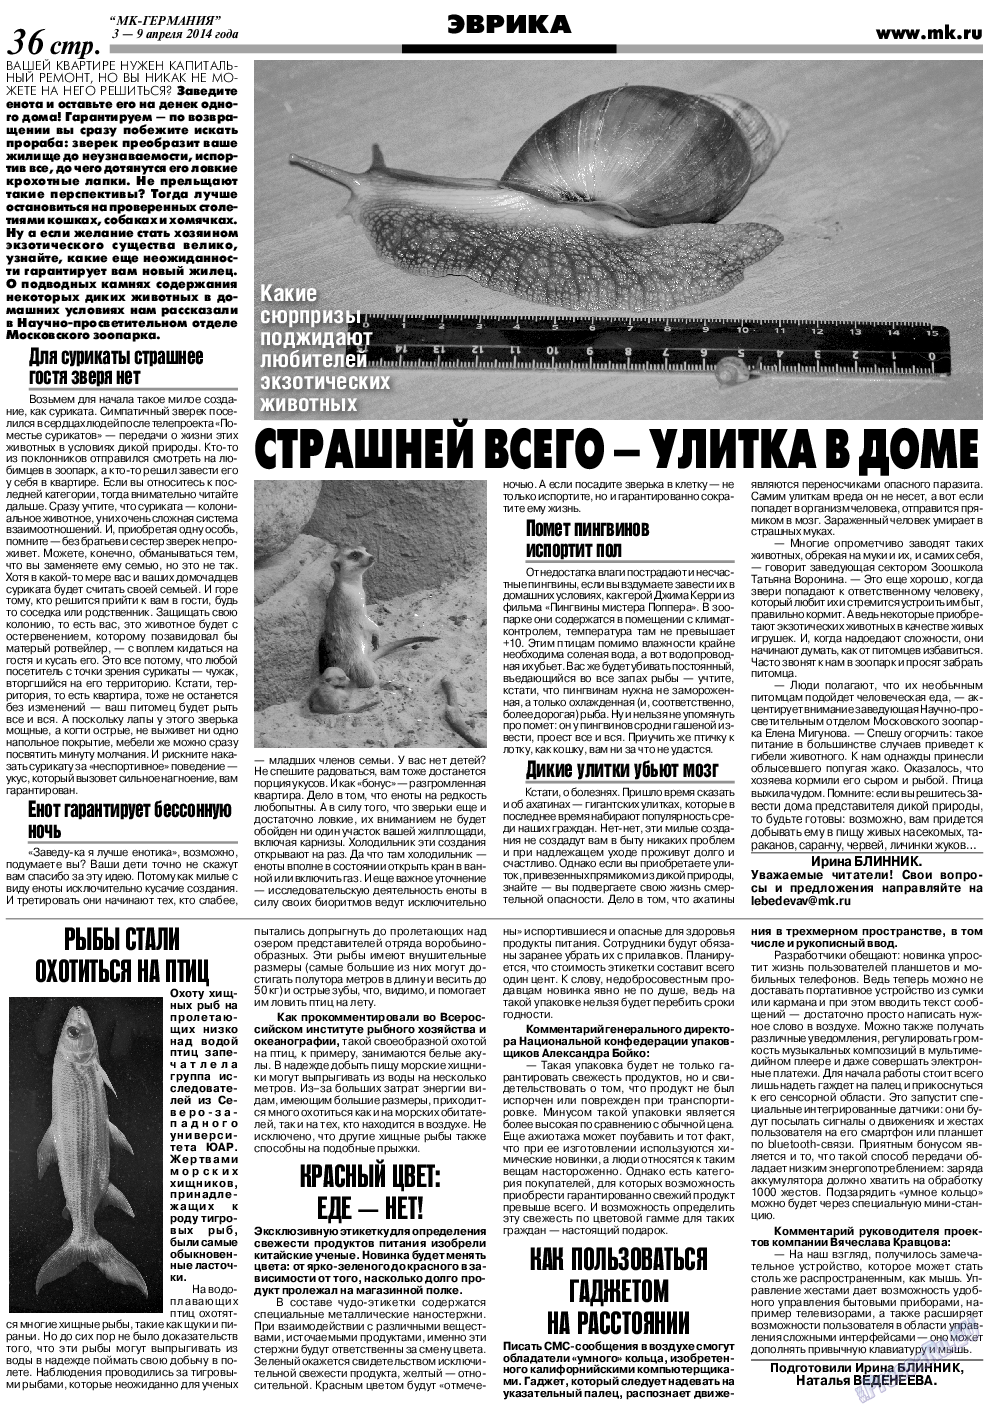 МК-Германия, газета. 2014 №14 стр.36